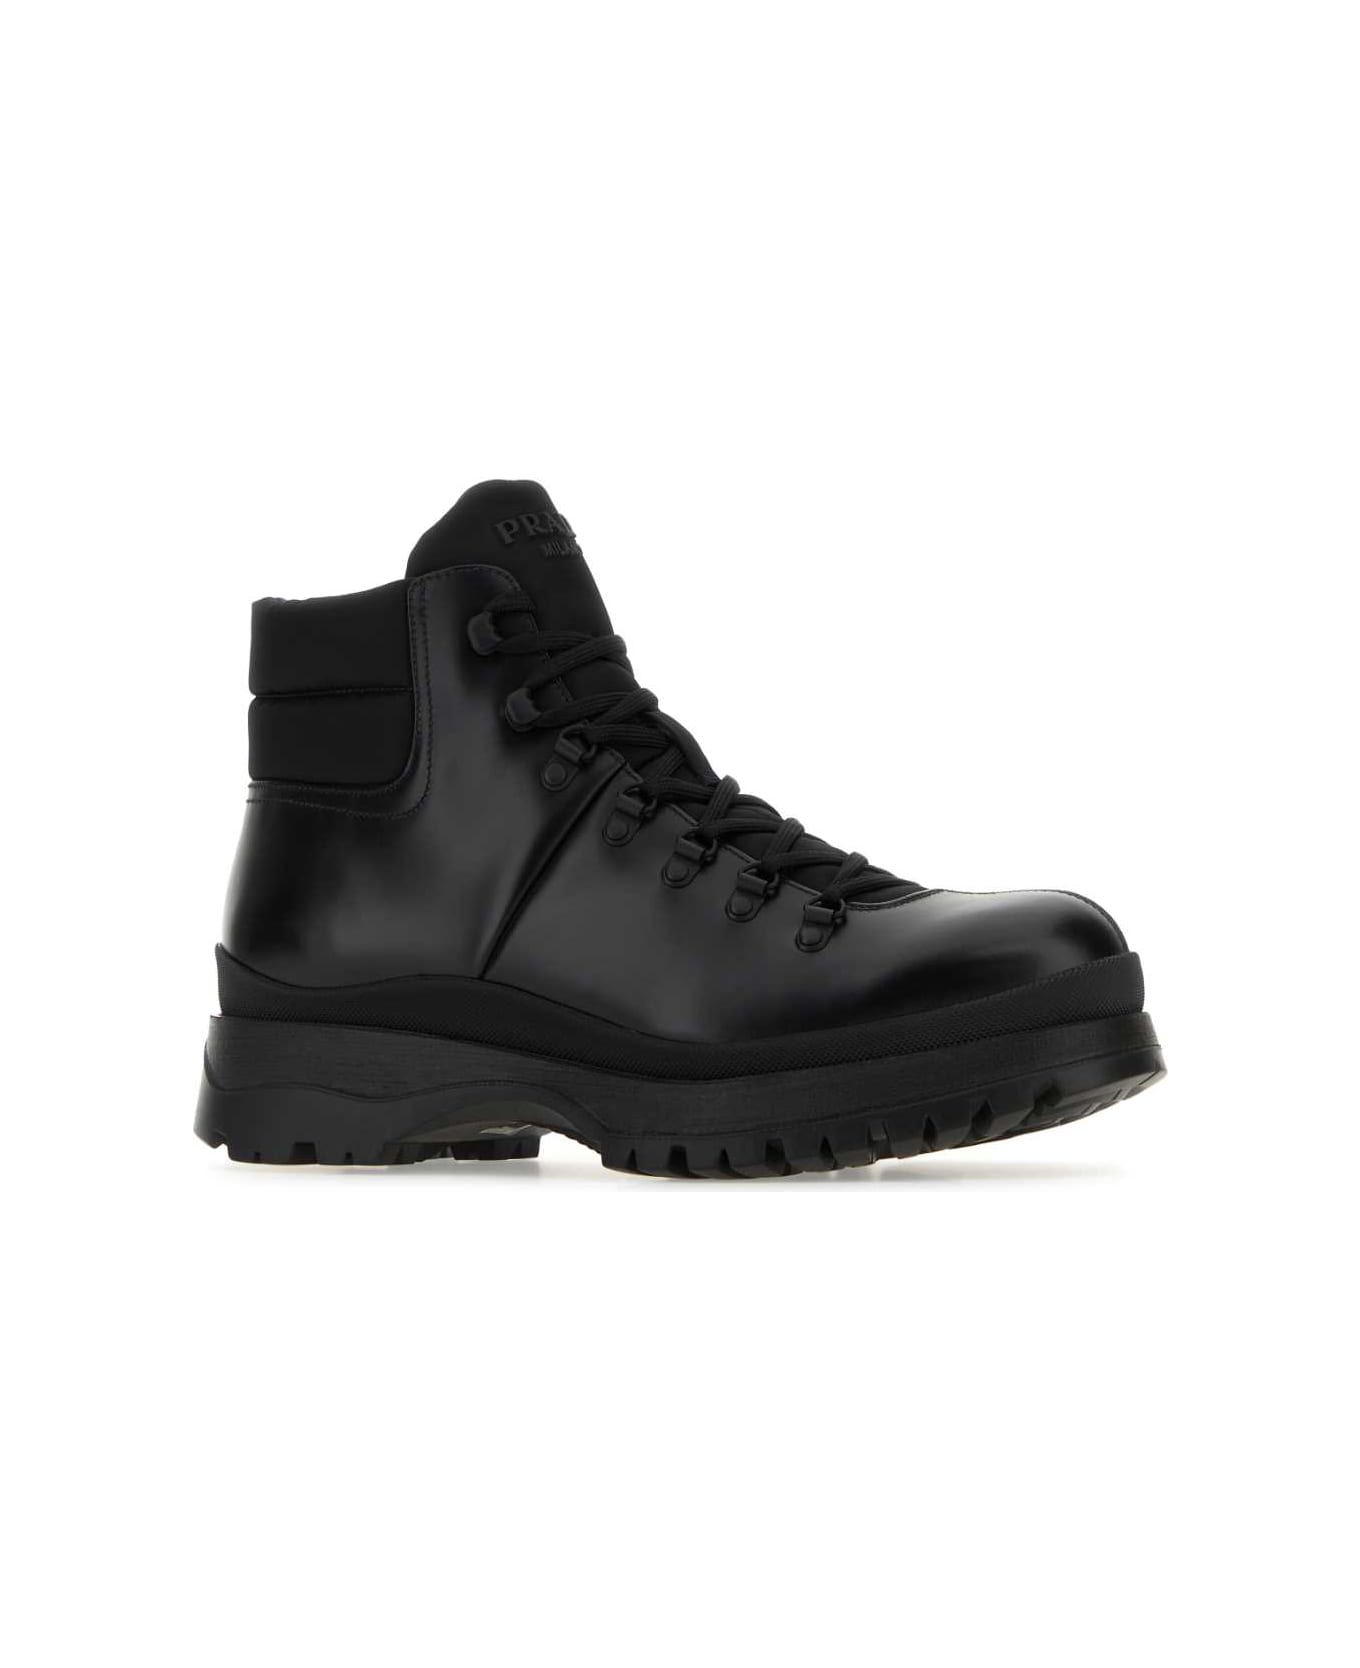 Prada Black Re-nylon And Leather Brixxen Ankle Boots - F0002 ブーツ